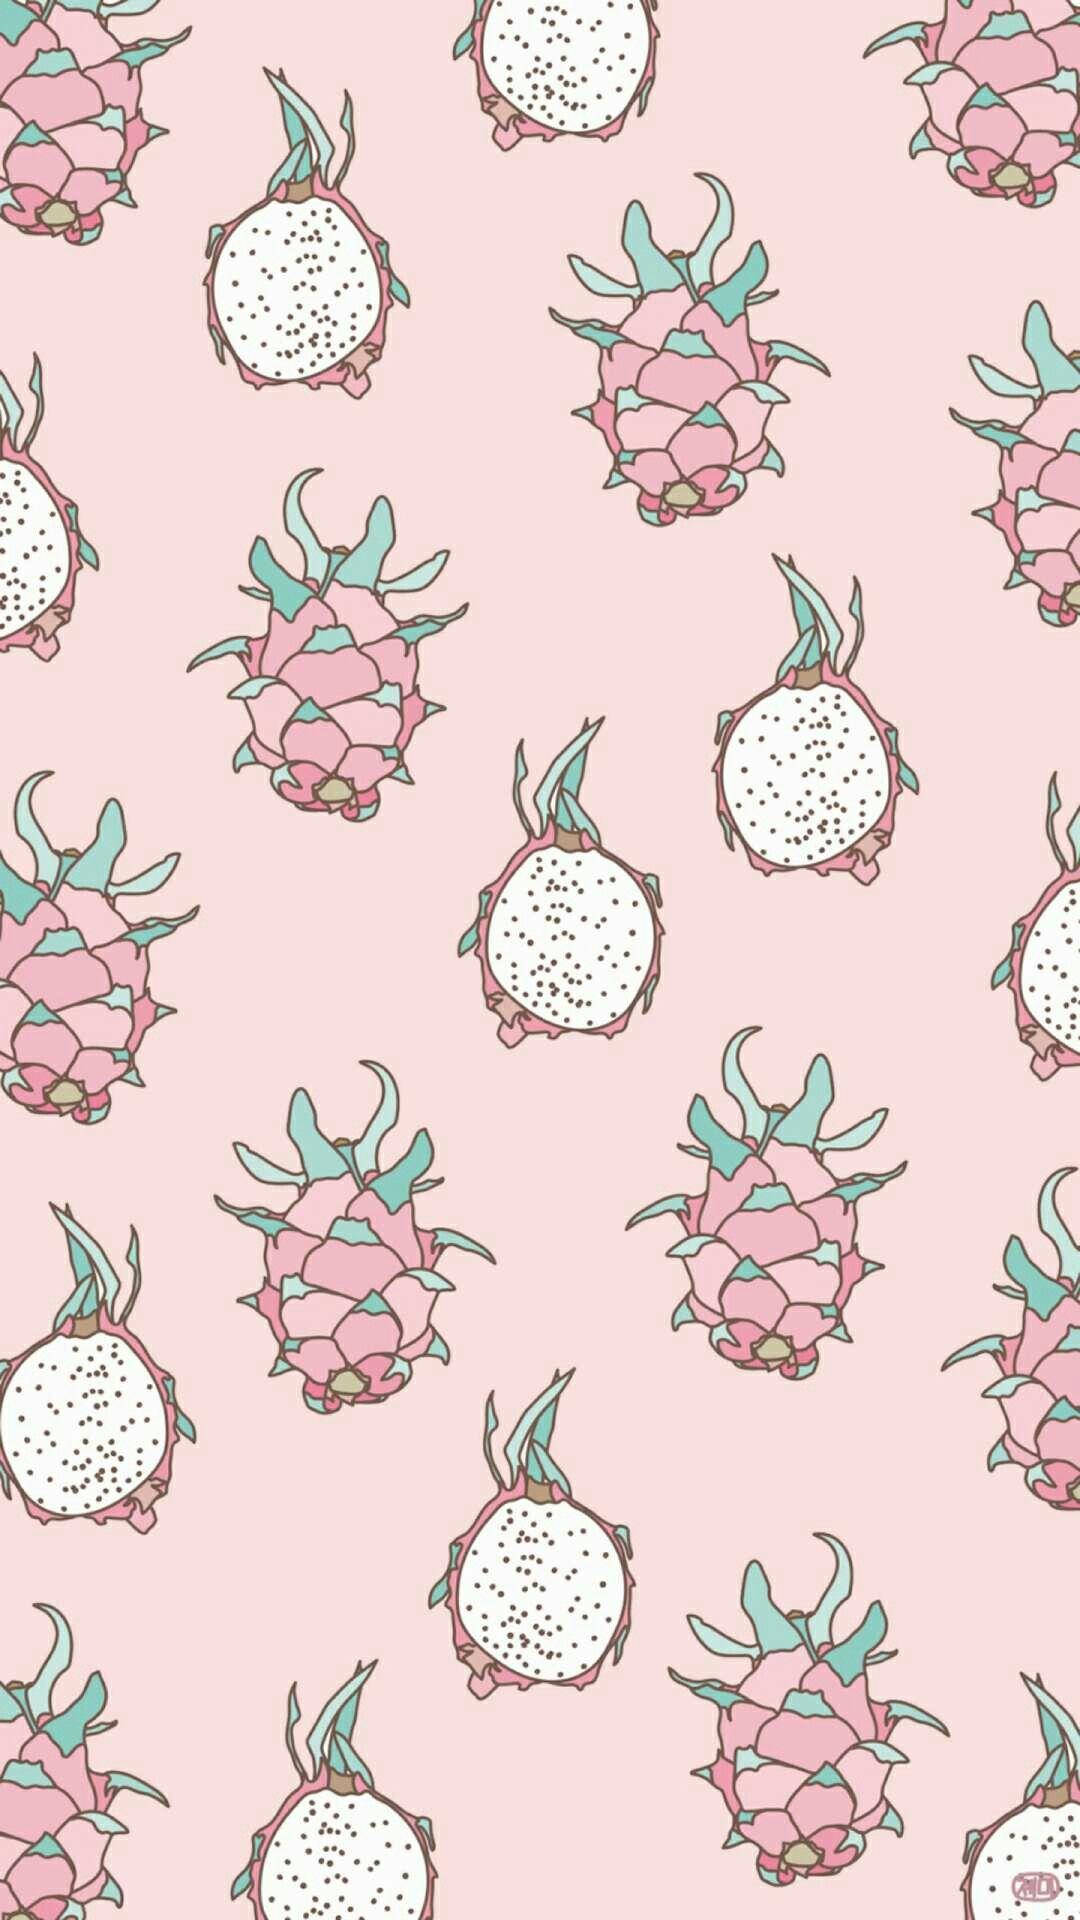 Caption: Vibrant Dragonfruit Arrangement on a Baby Pink Background Wallpaper